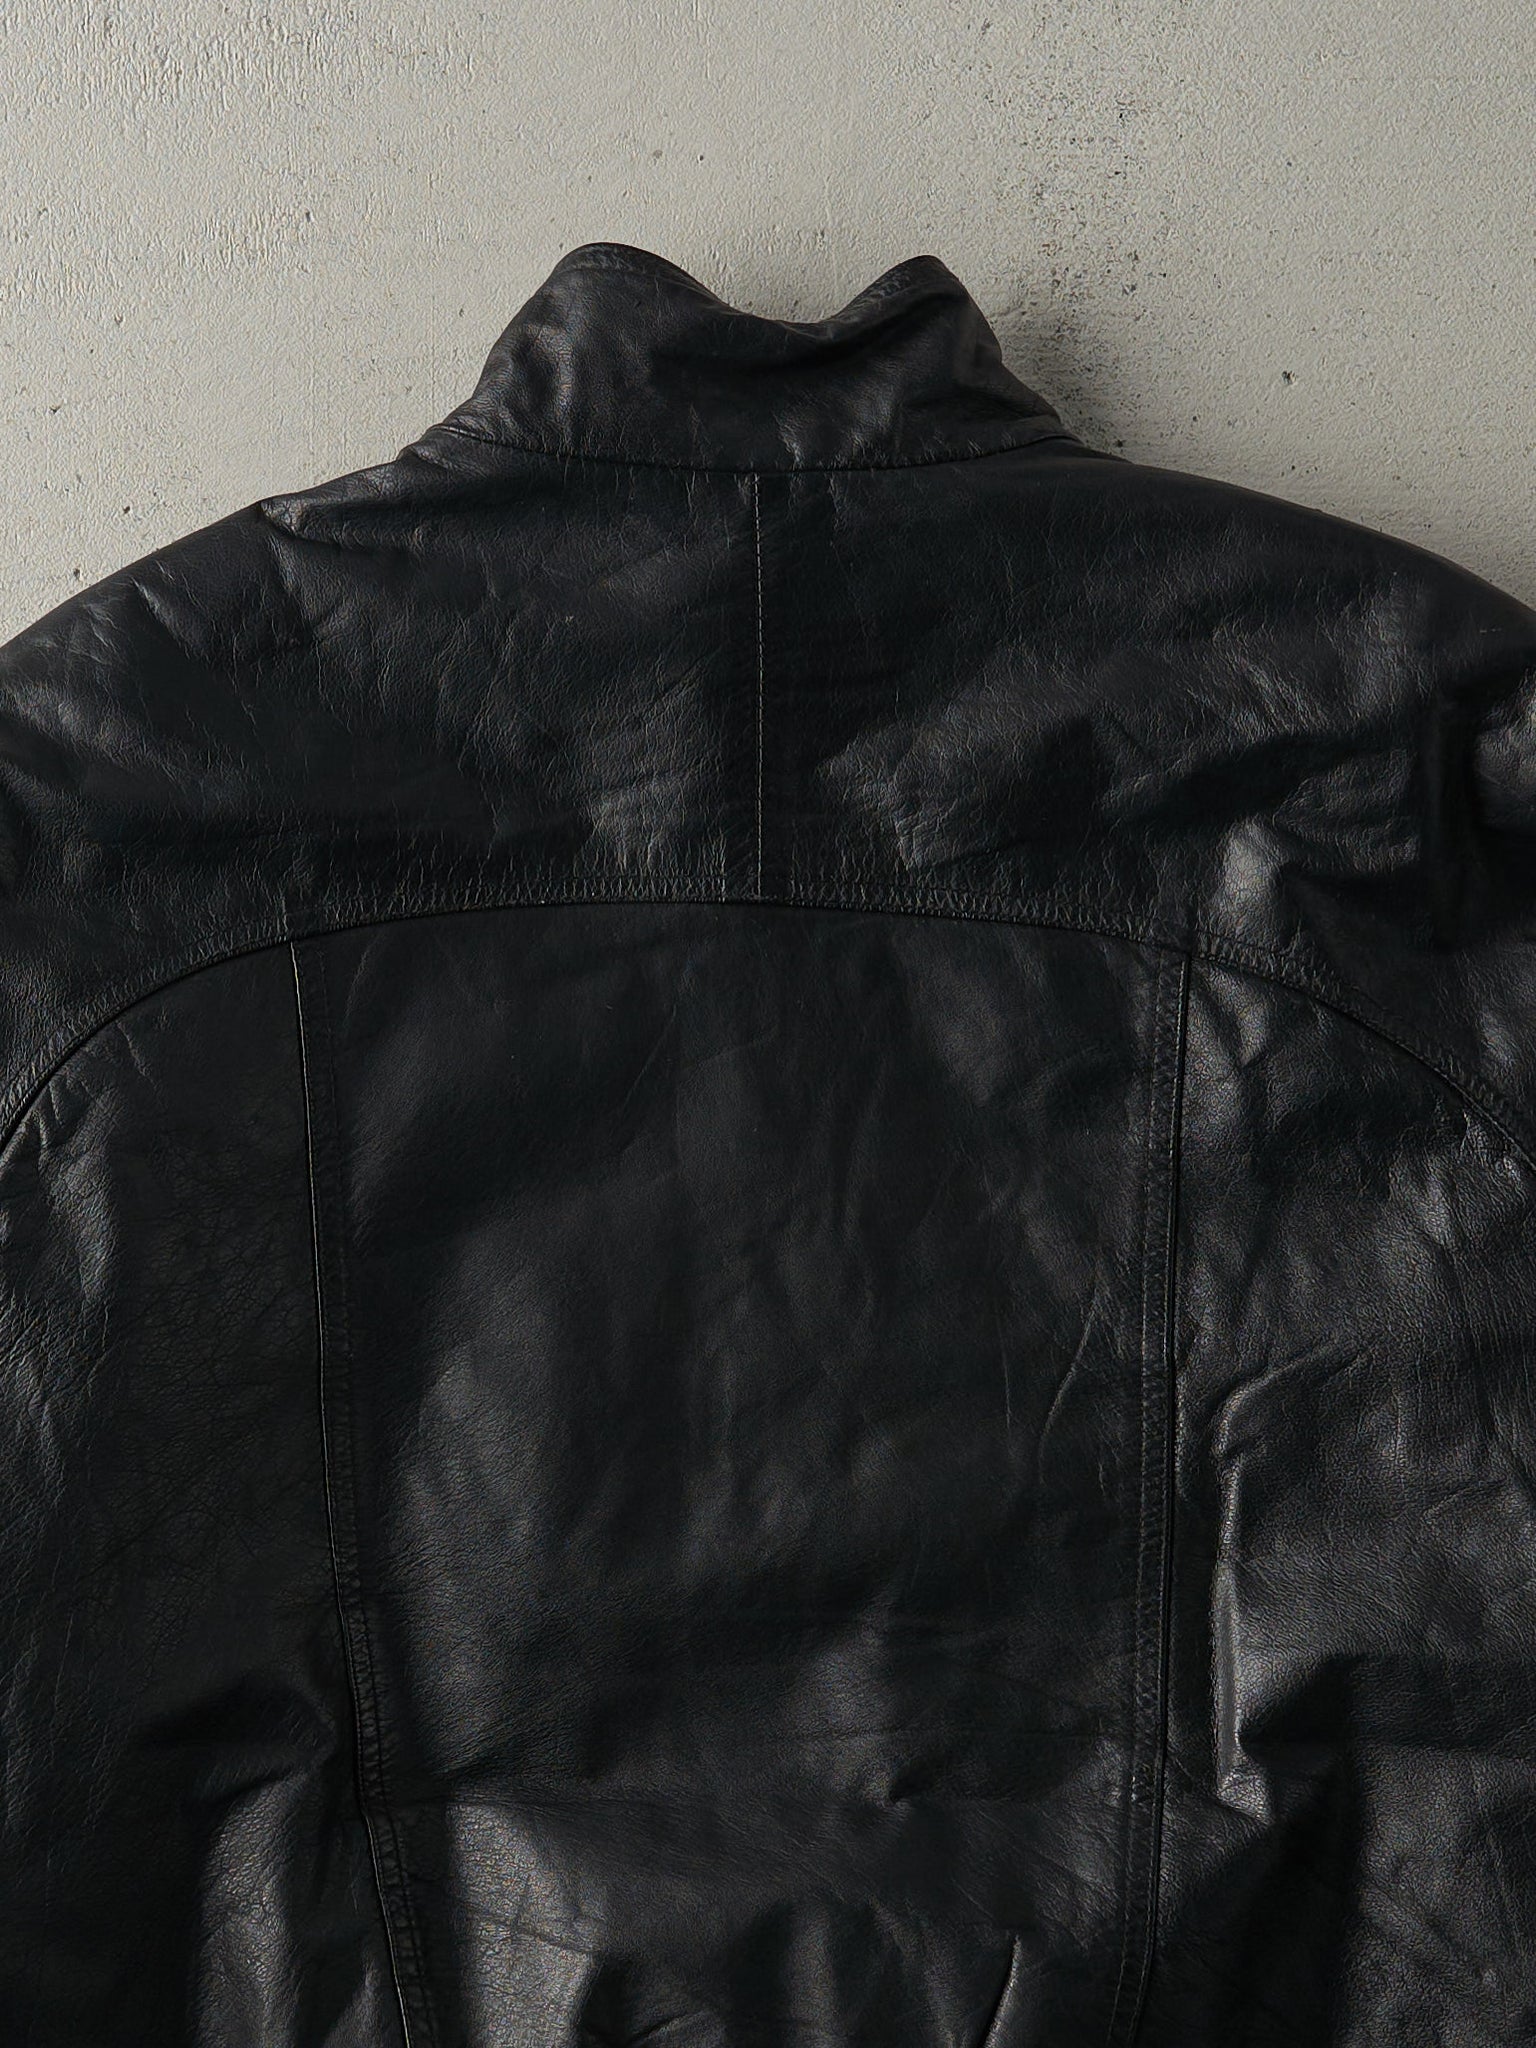 Vintage 80s Black Todays News Leather Jacket (L)